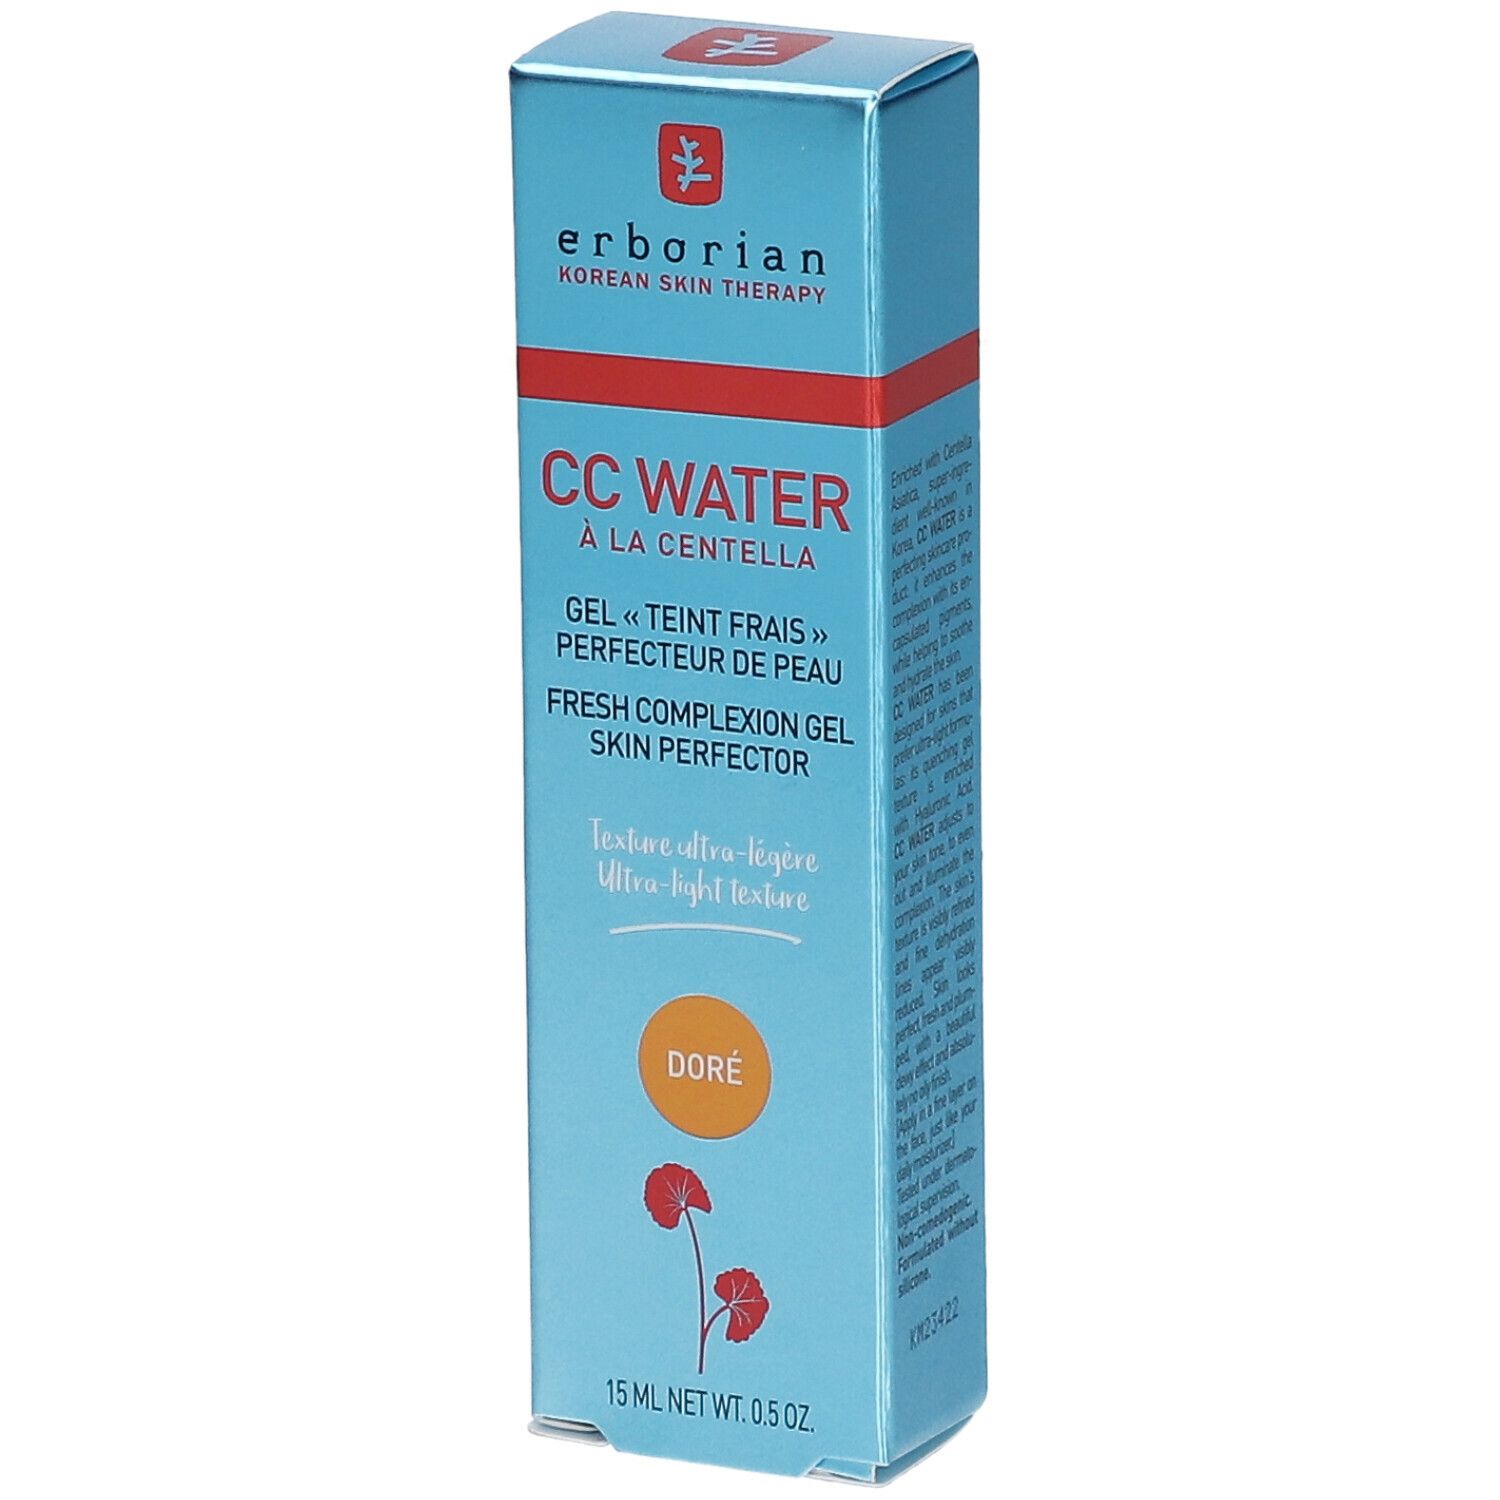 erborian CC Water Doré - Perfecteur de peau